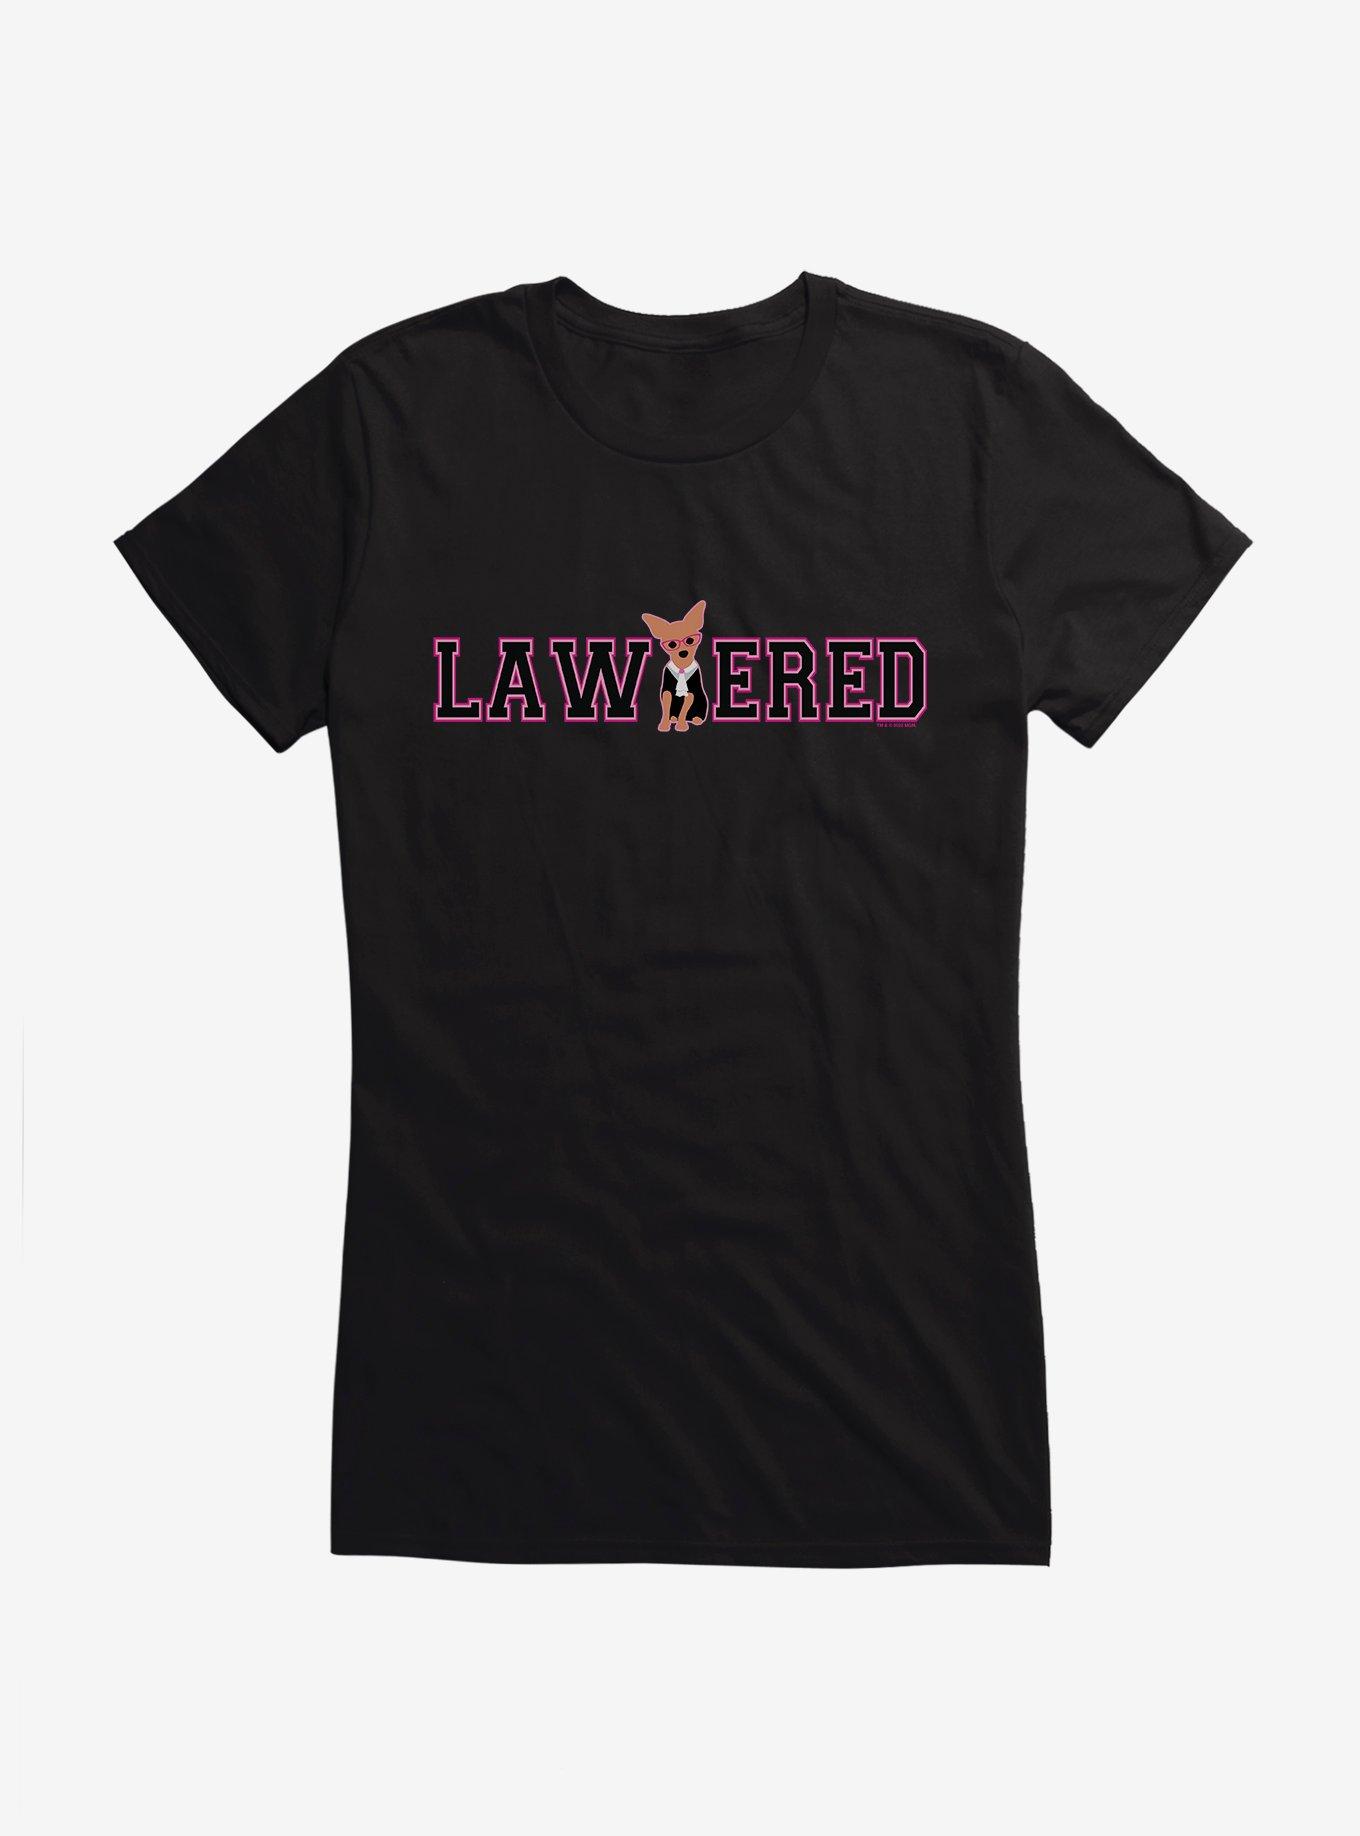 Legally Blonde Bruiser Lawyered Girls T-Shirt